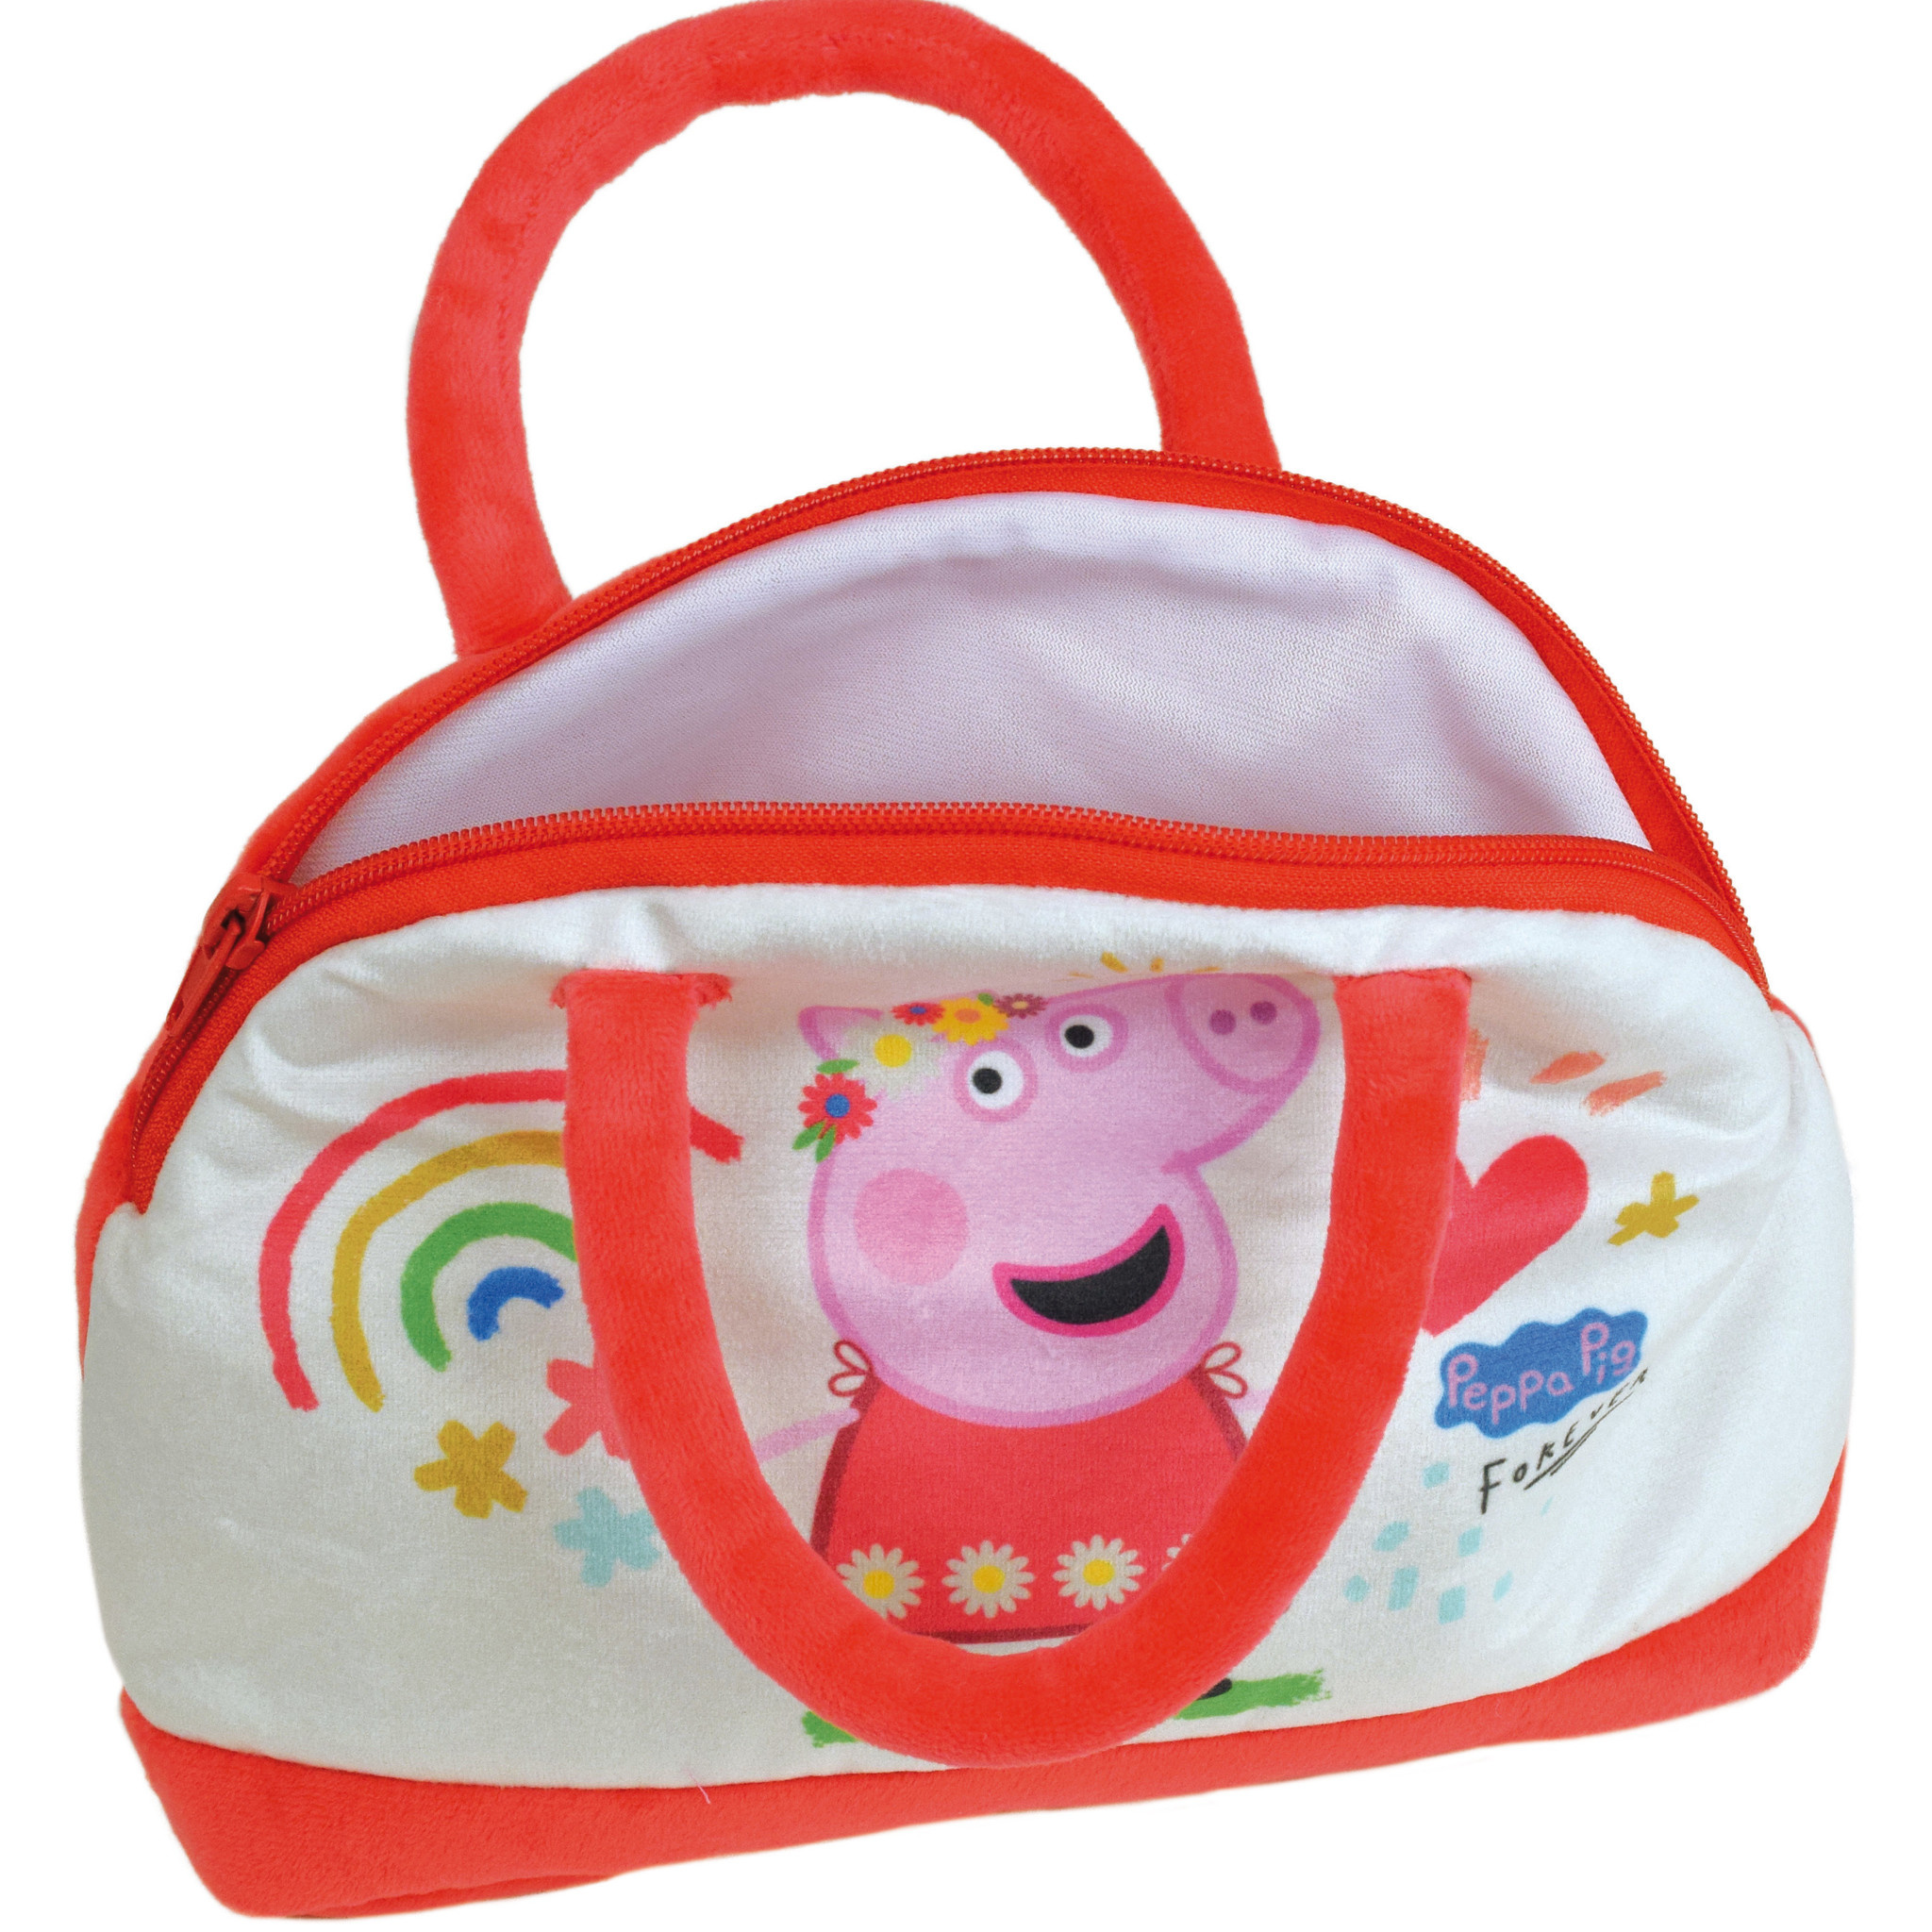 Peppa Pig Handbag Forever - 20 x 26 x 5 cm - Polyester